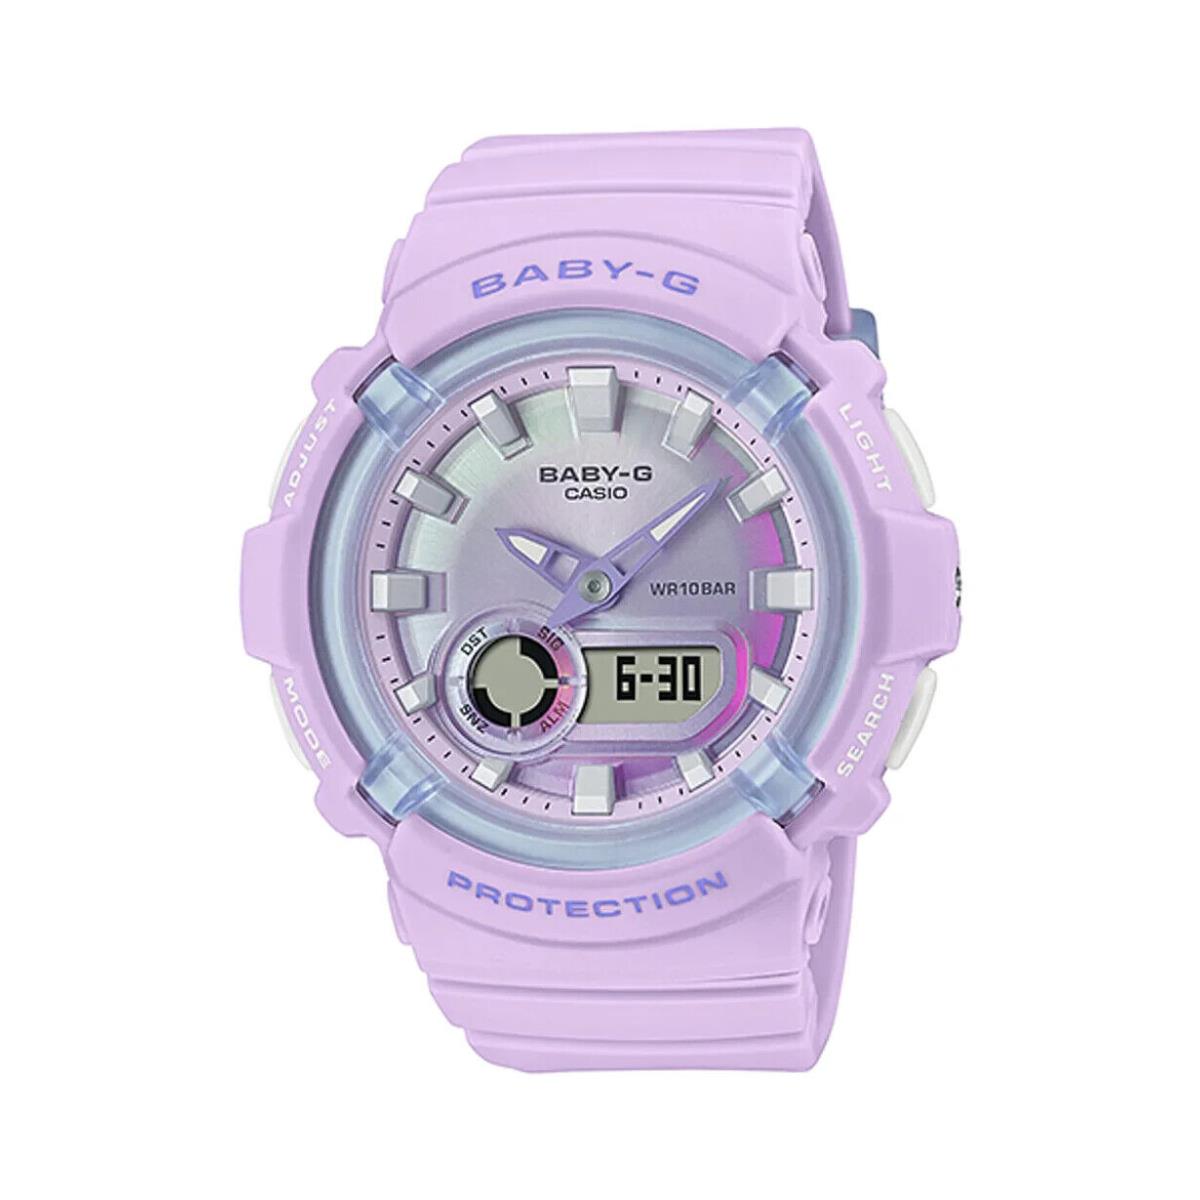 Casio Baby-g BGA-280 Lineup Pink Resin Band Watch BGA280DR-4A